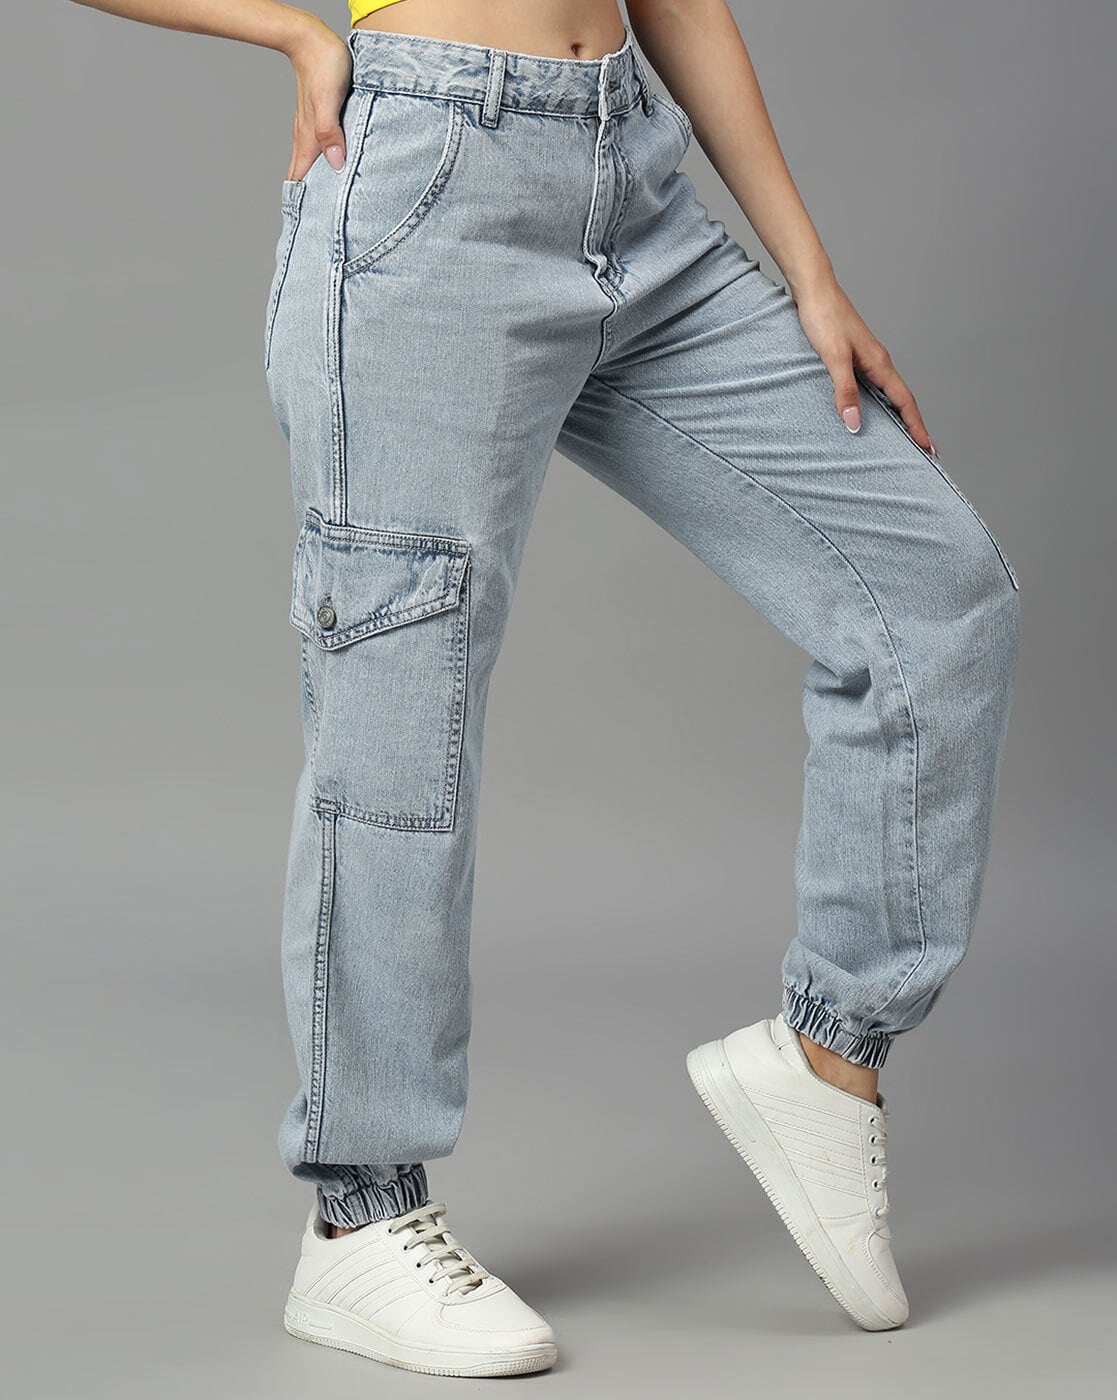 Buy SweatyRocks Women's High Waist Straight Leg Denim Shorts Solid Jean  Shorts Summer Hot Pants with Pockets, Light Wash, XX-Small at Amazon.in